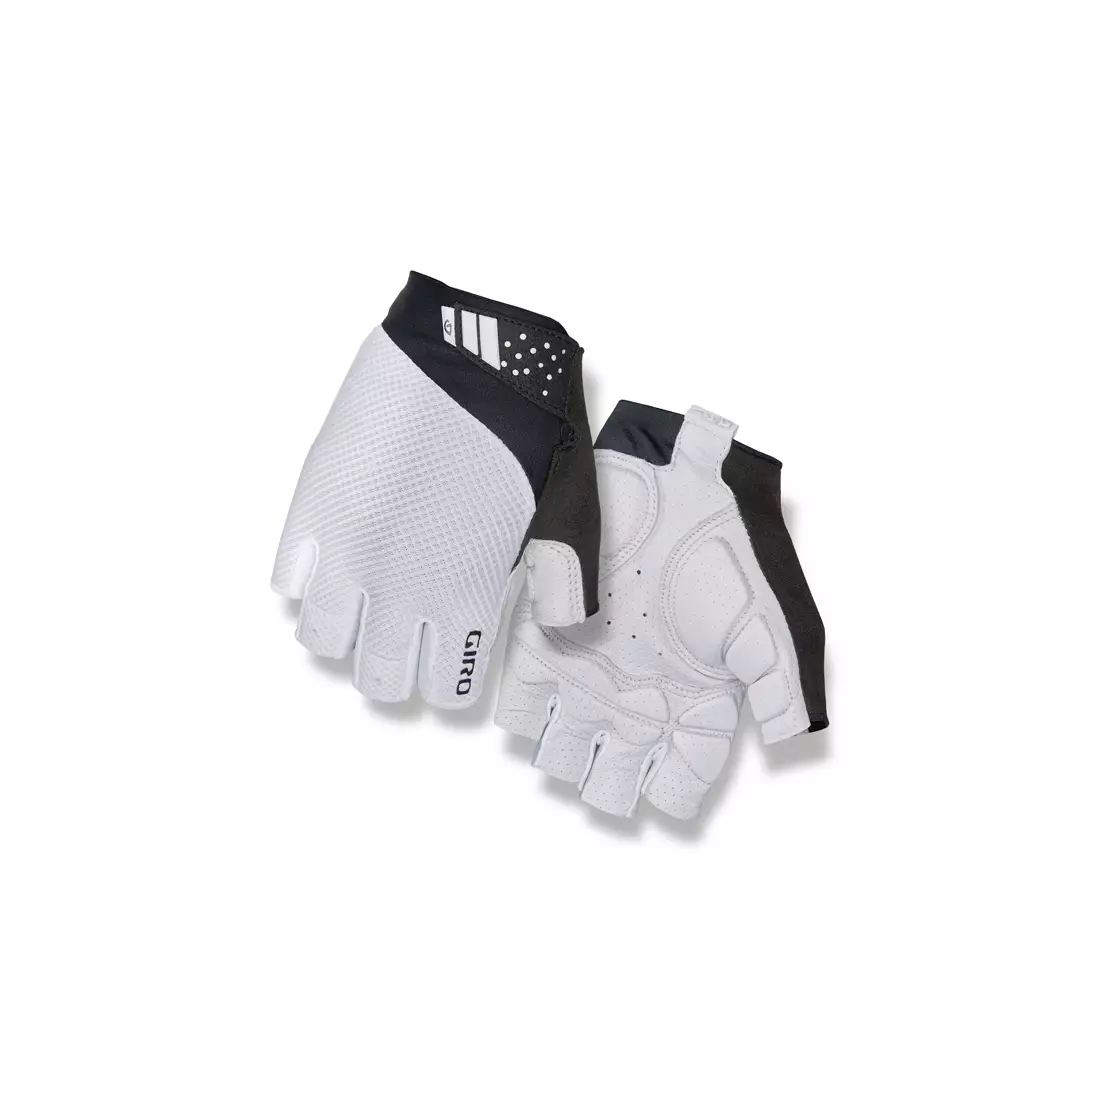 GIRO MONACO II bicycle gloves, black and white